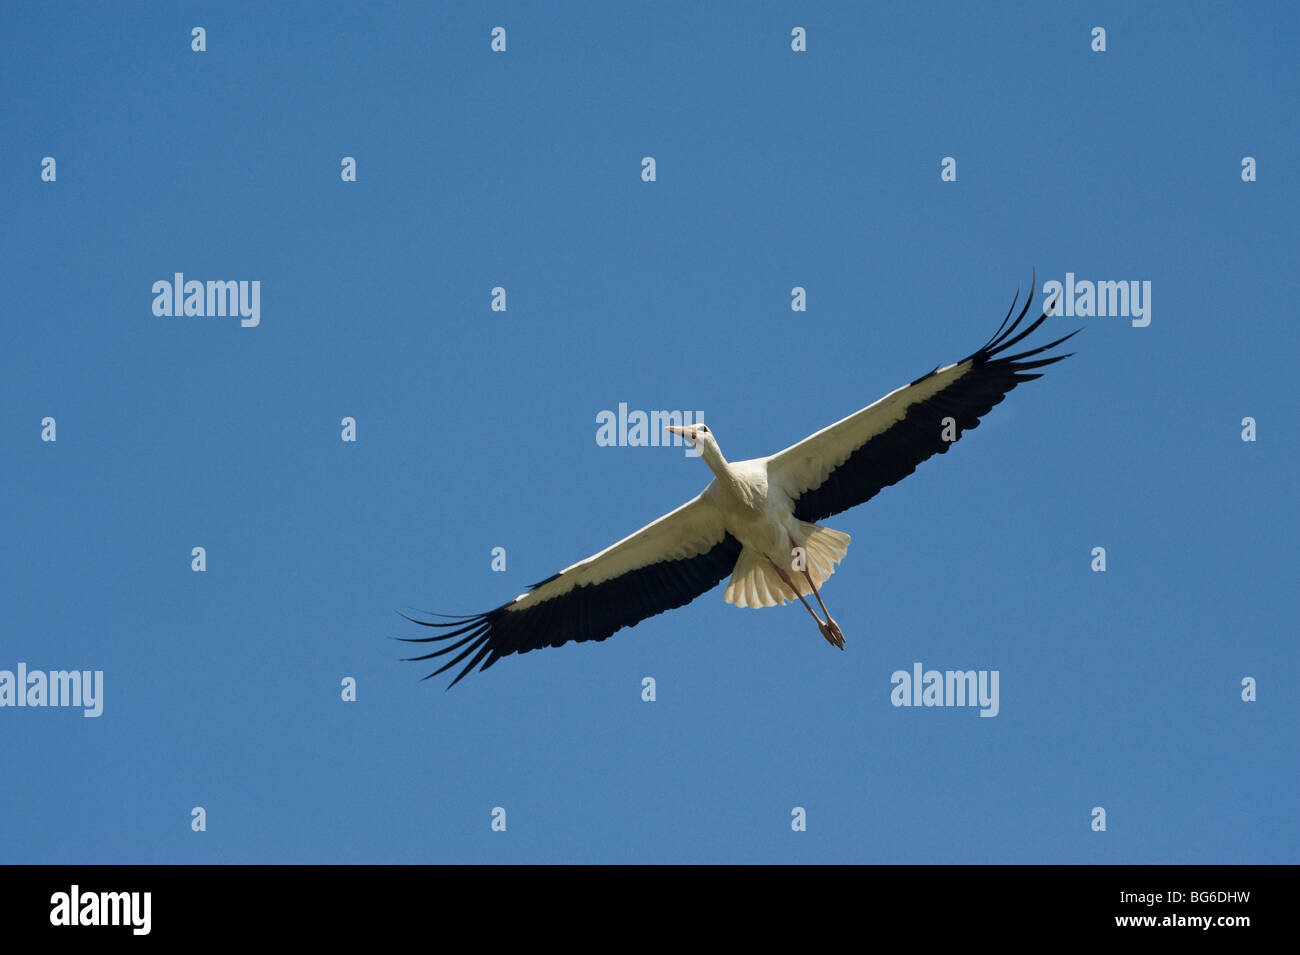 Italy, Piedmont, Racconigi (Cn), a White Stork on the wing Stock Photo